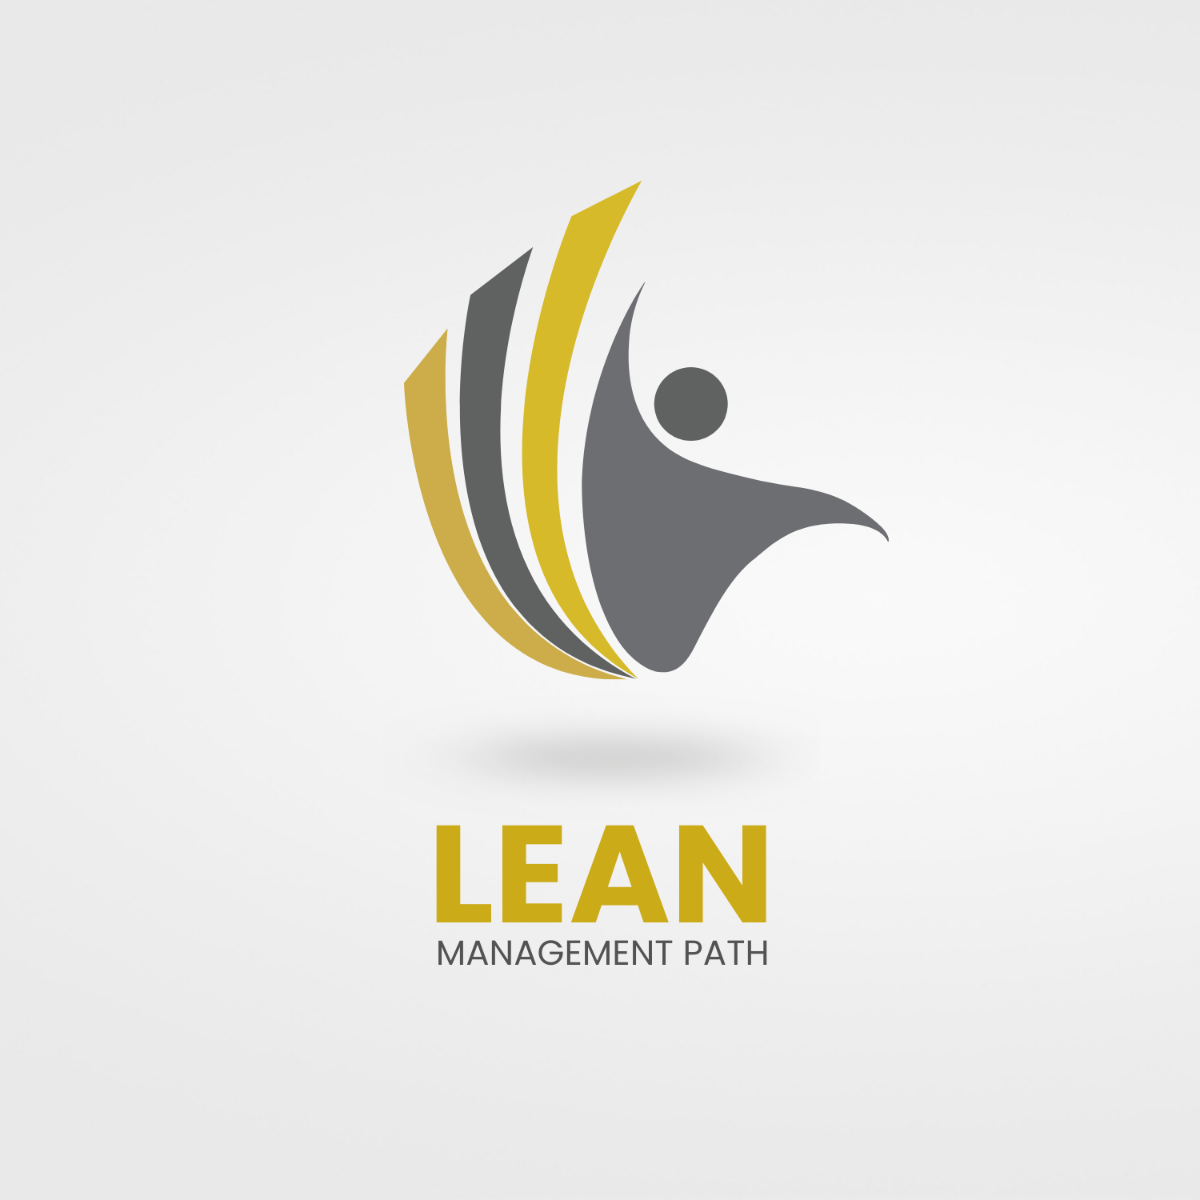 Lean Management Path Logo Template